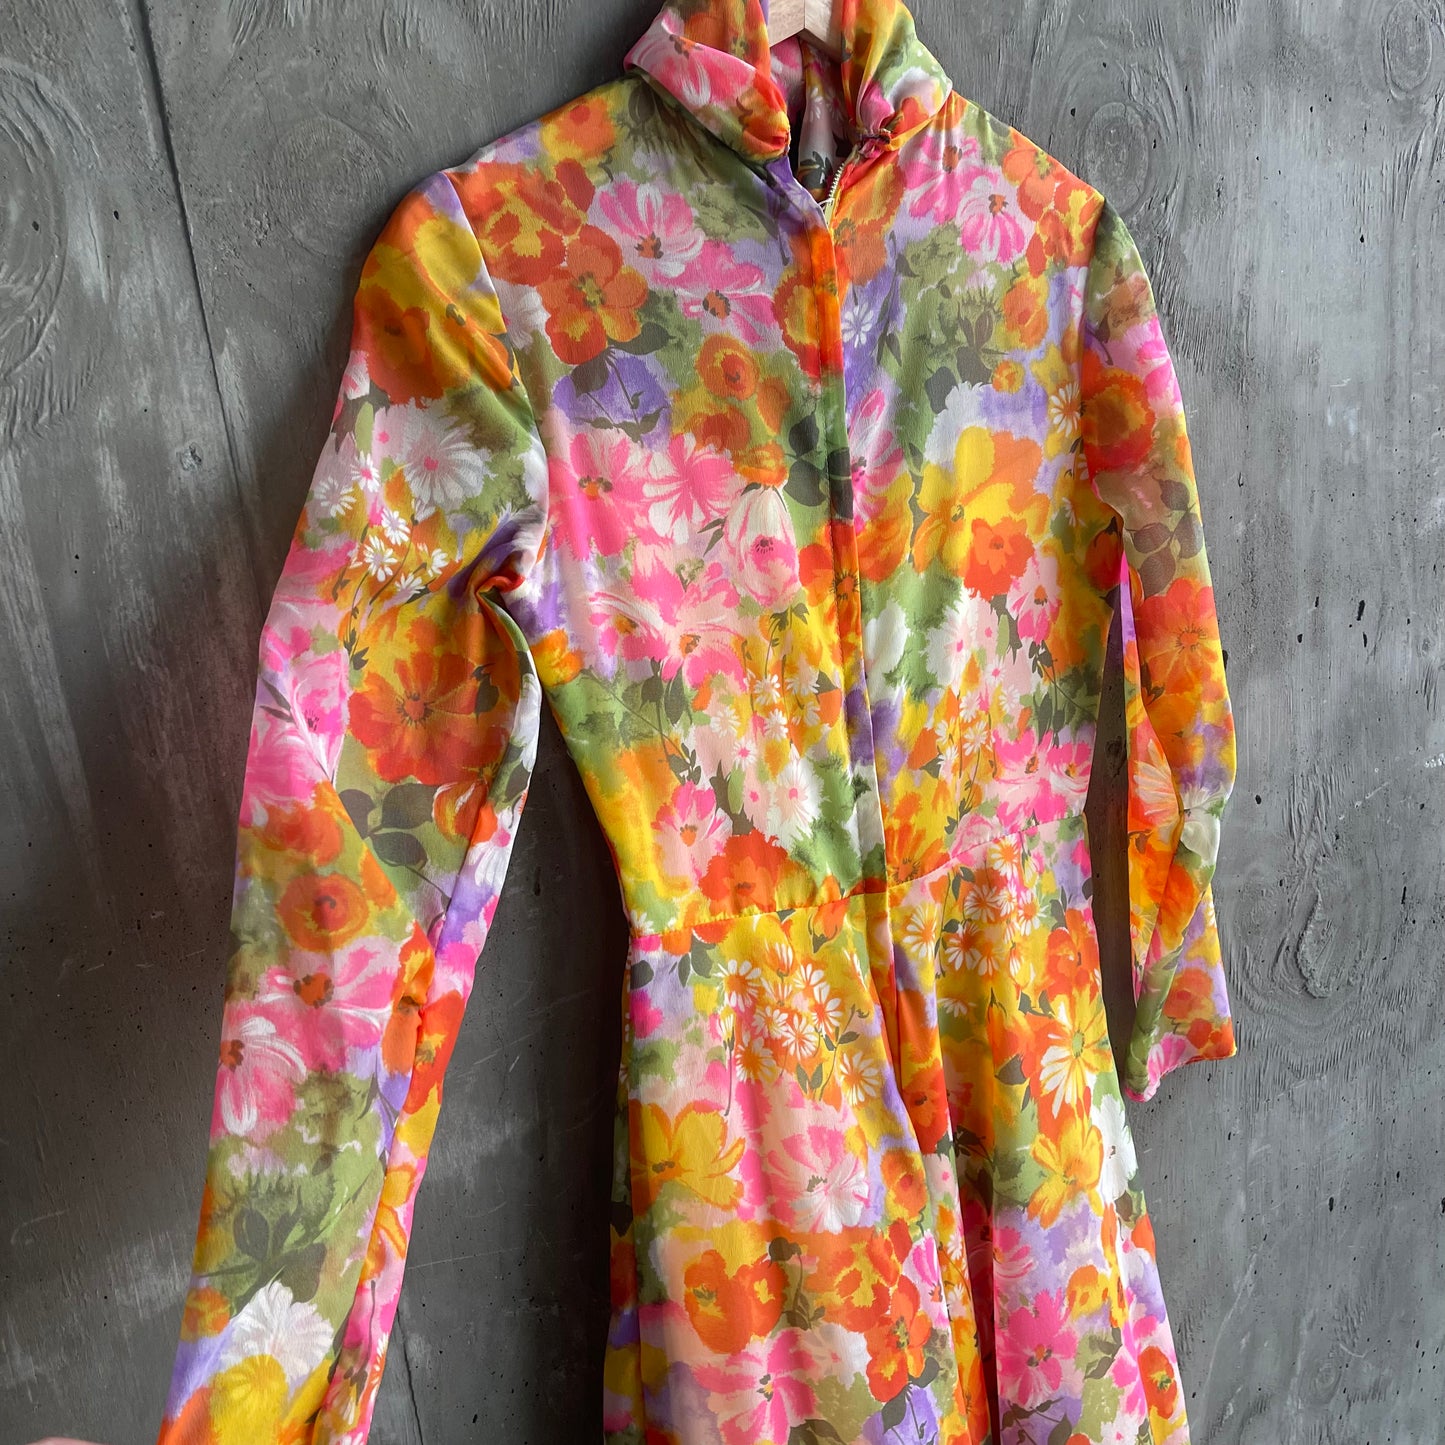 Vintage Prairie Dress in Vibrant Floral Print 70’s Handmade